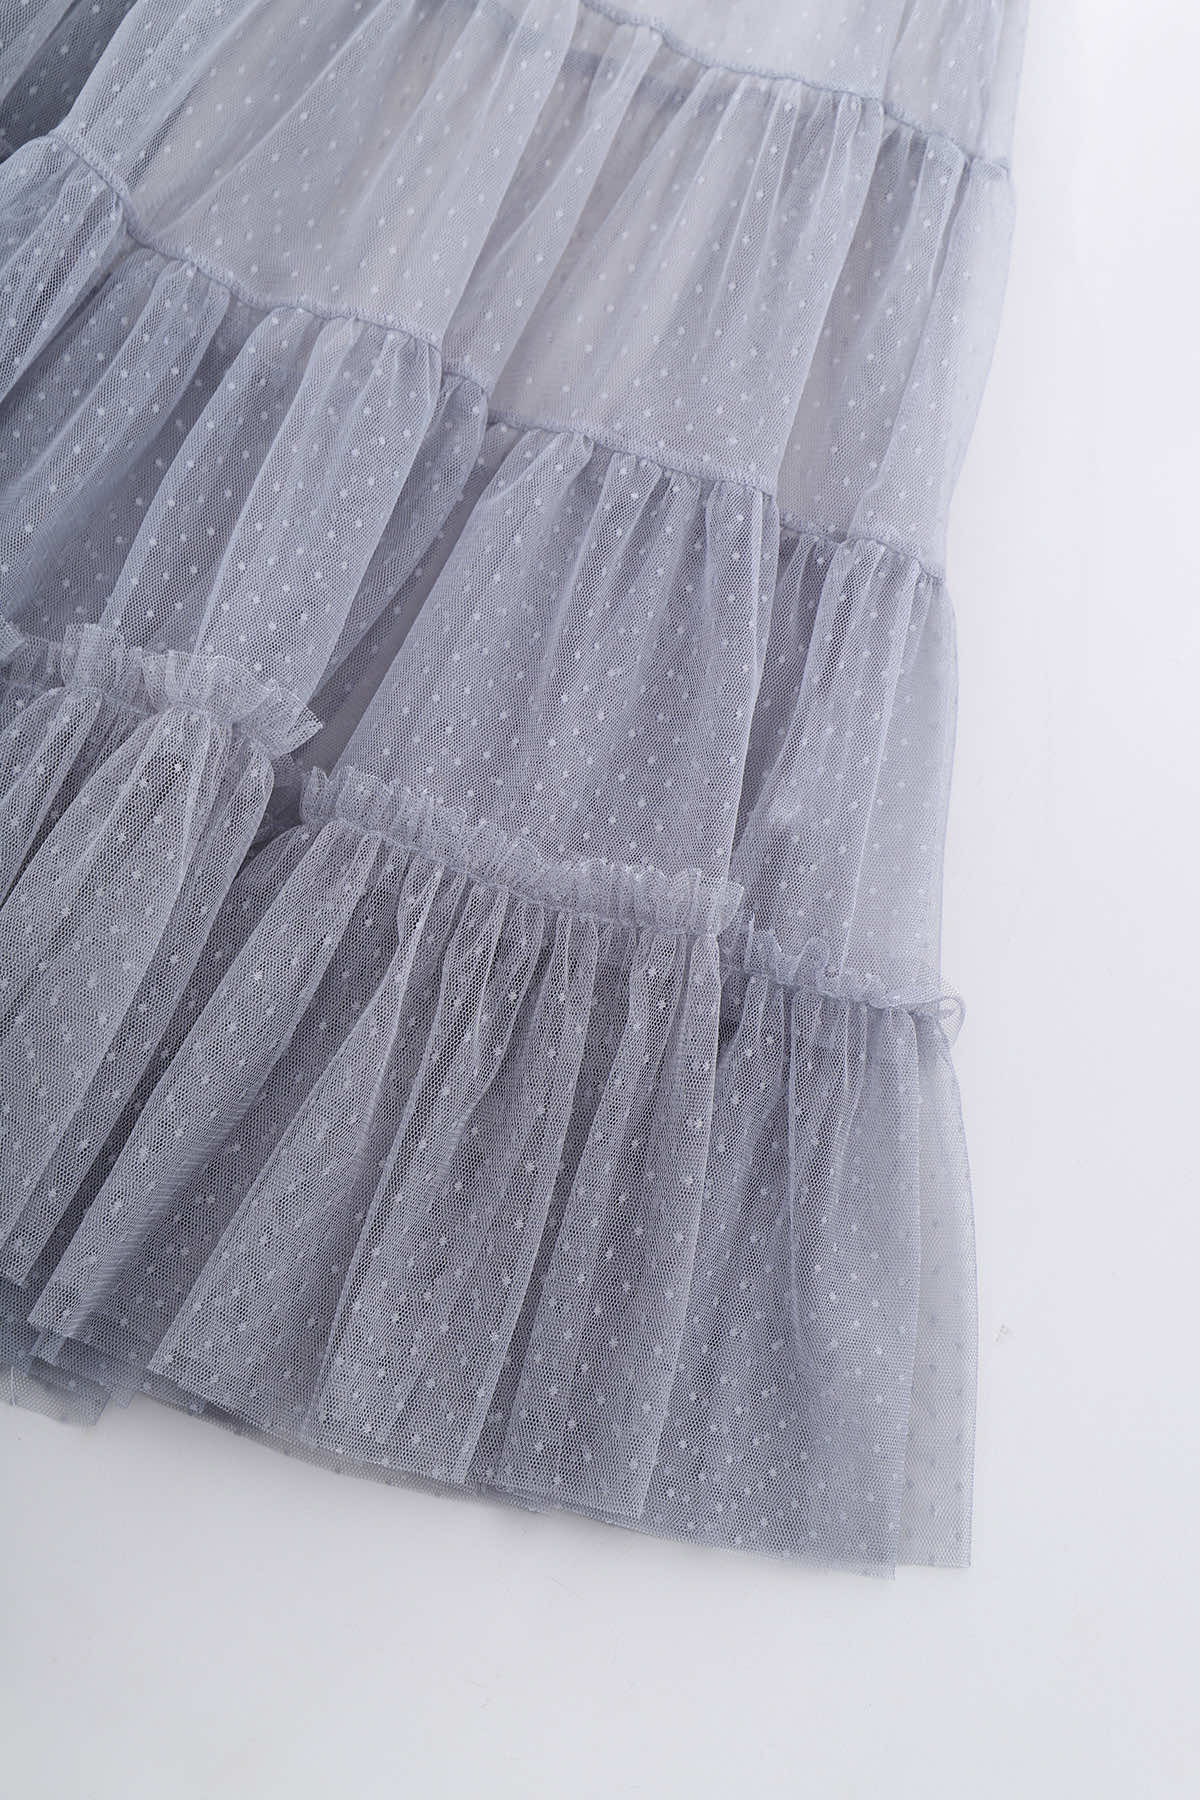 Windsor Petticoat Grey